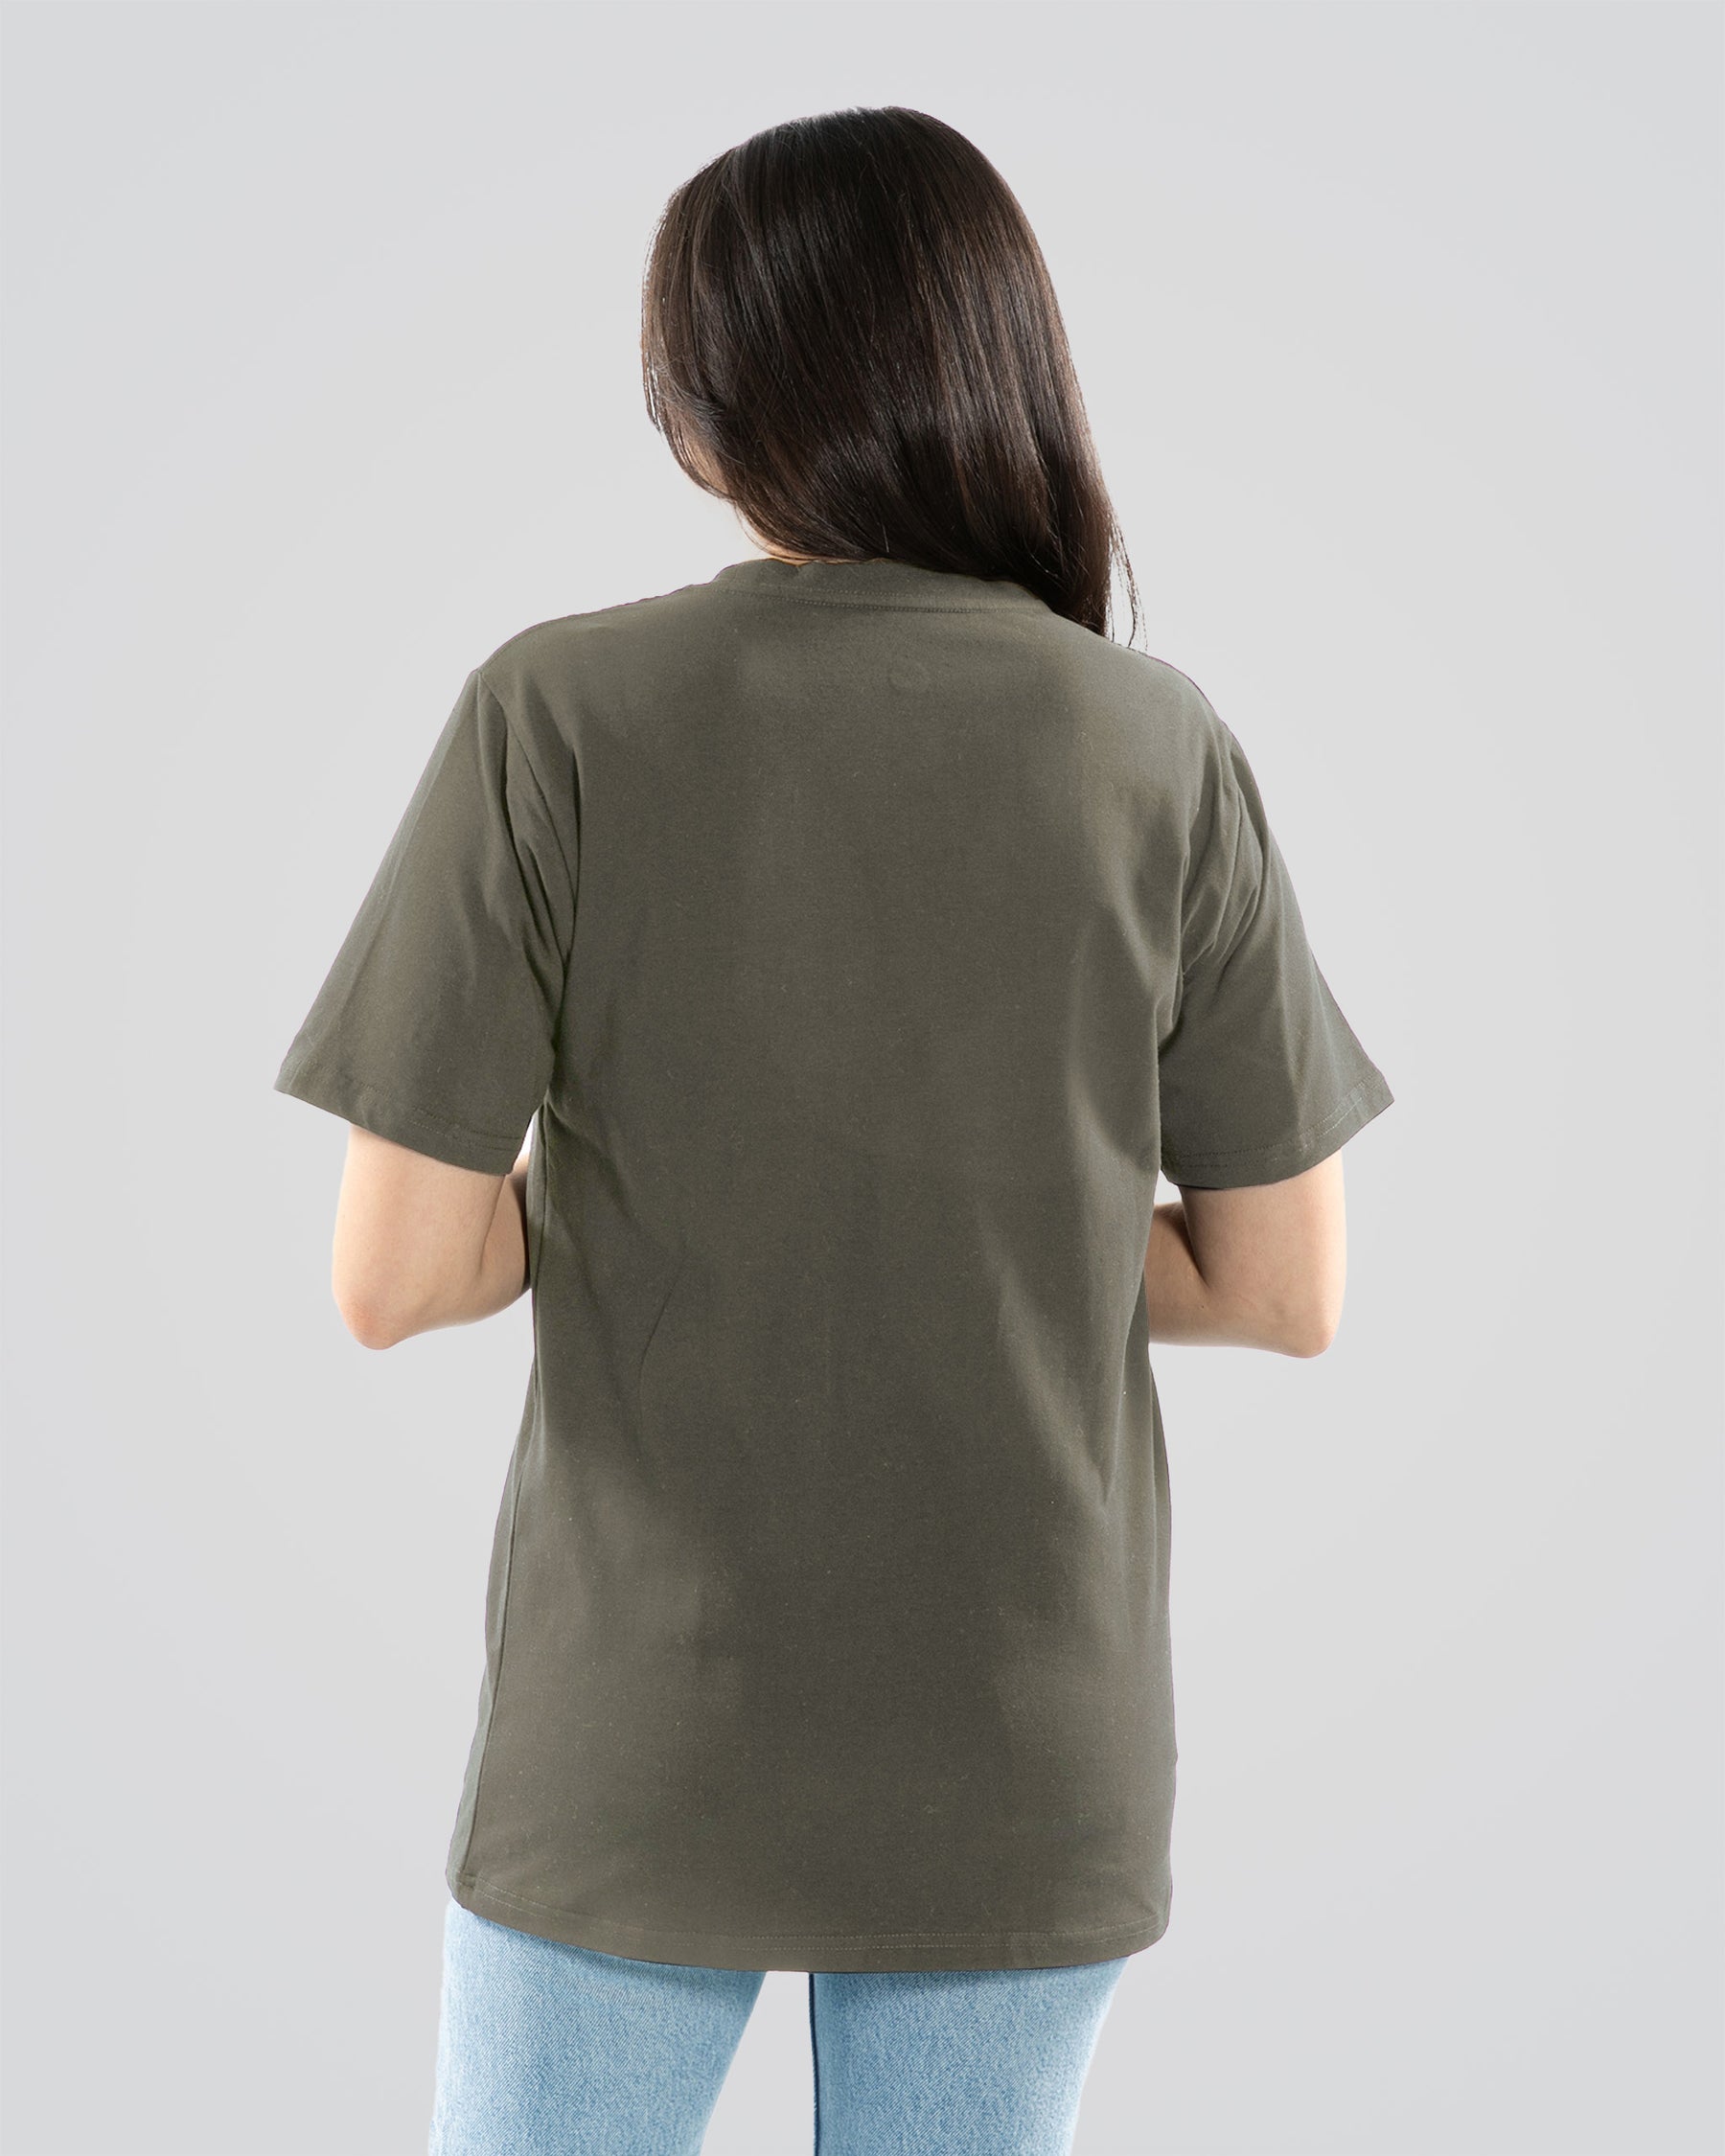 Women's Military Crewneck Sweat Proof Undershirt